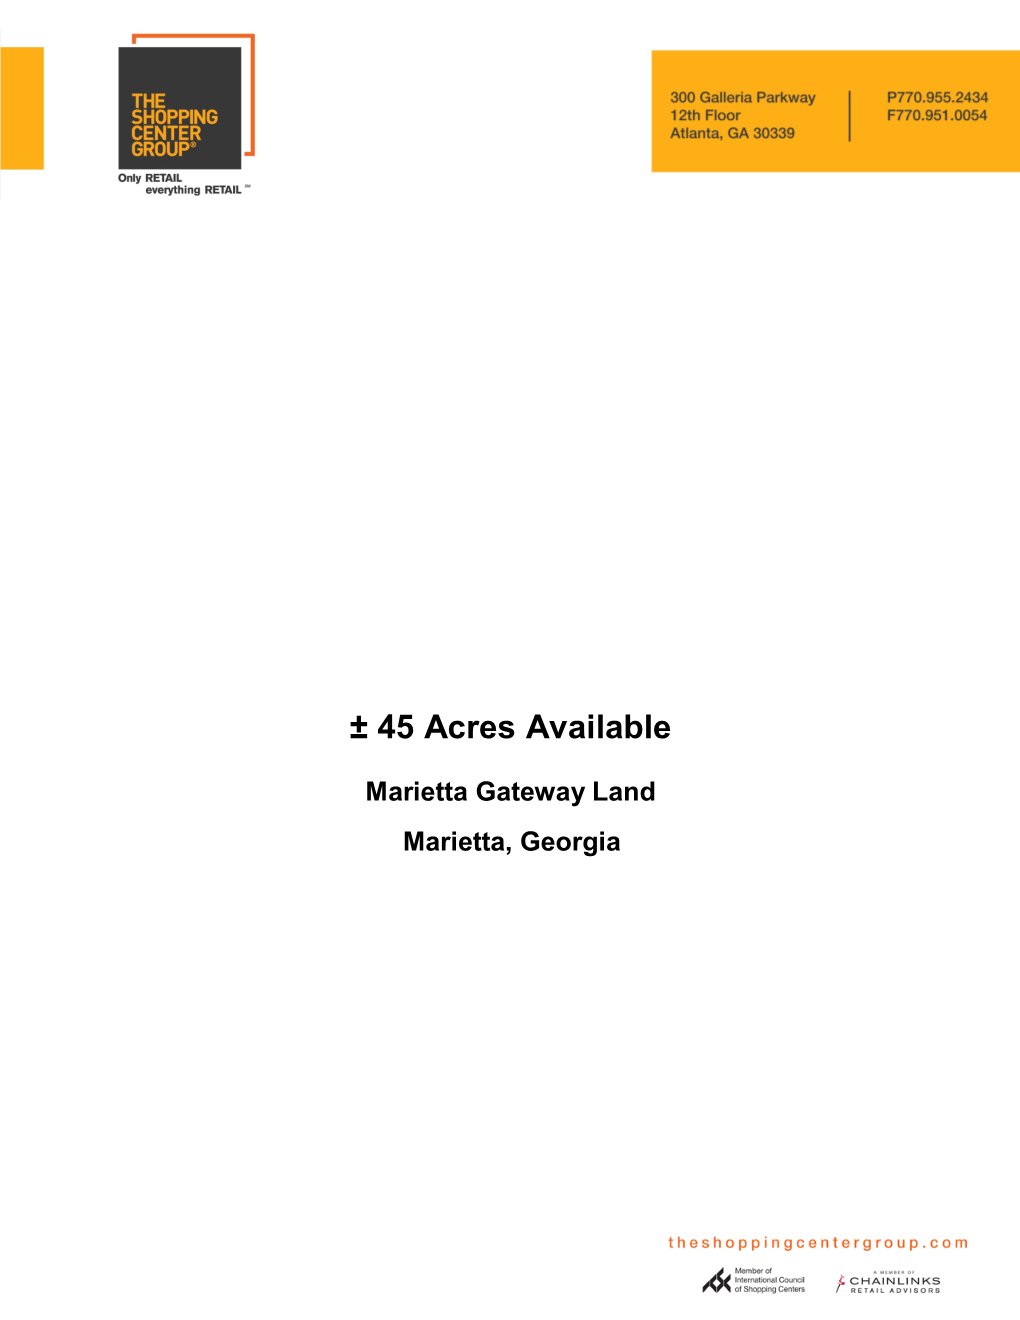 Marietta Gateway Land Cover Page 2012